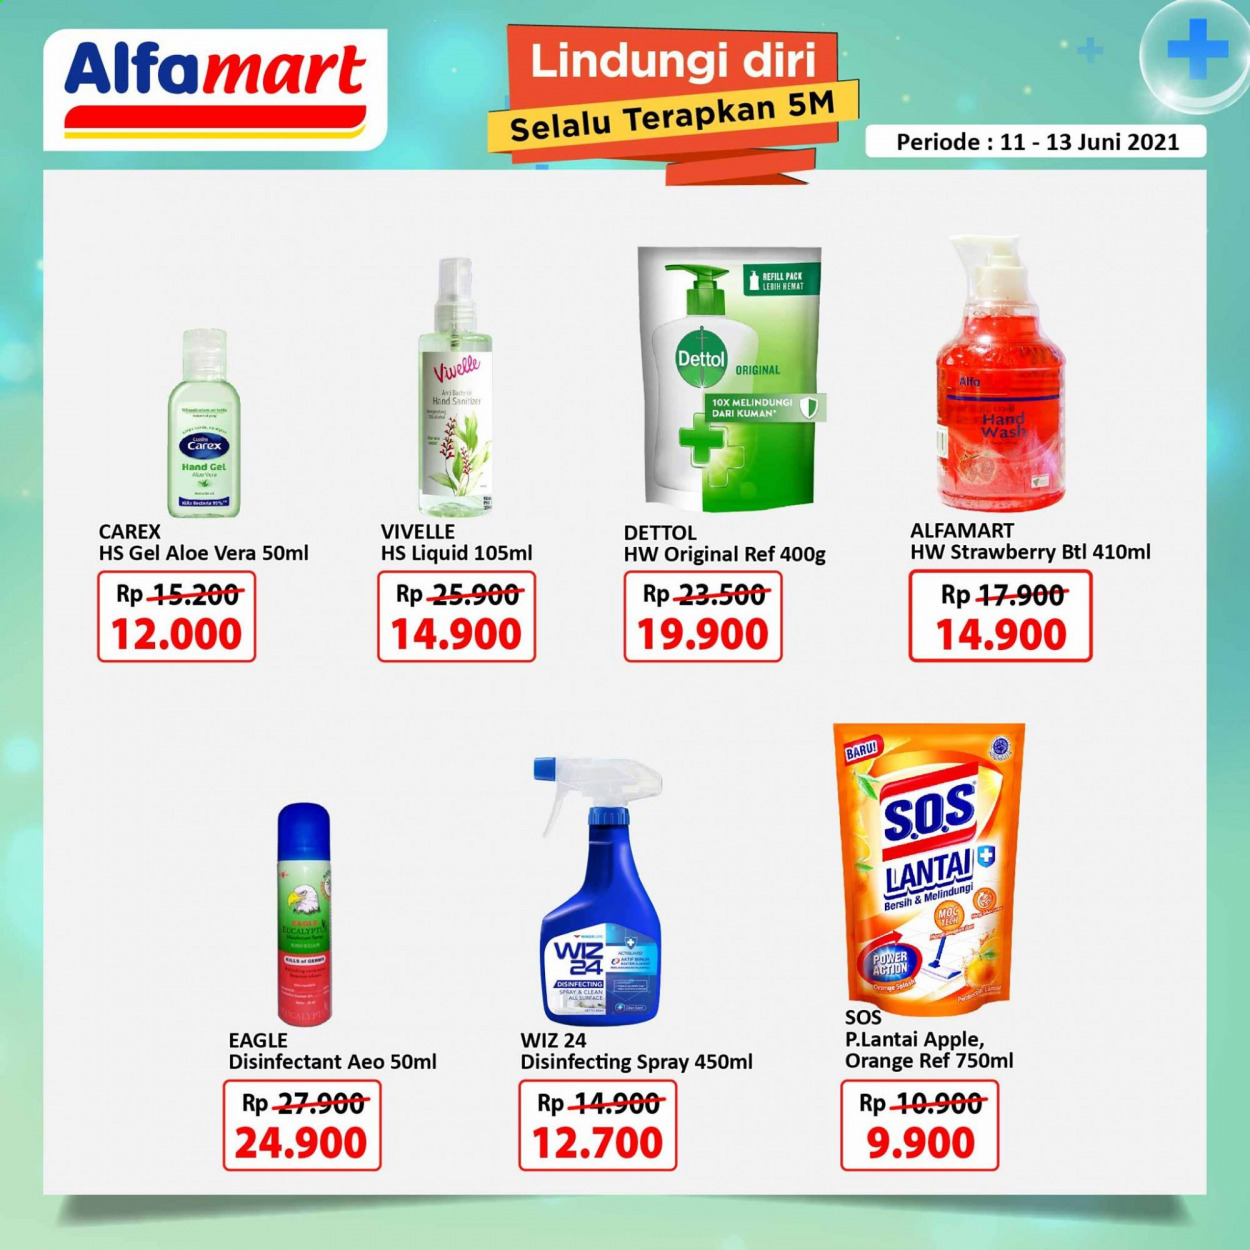 thumbnail - Promo Alfamart - 06/11/2021 - 06/13/2021 - Produk diskon - surface, dettol, apple, alfa, aloe, hand sanitizer. Halaman 1.